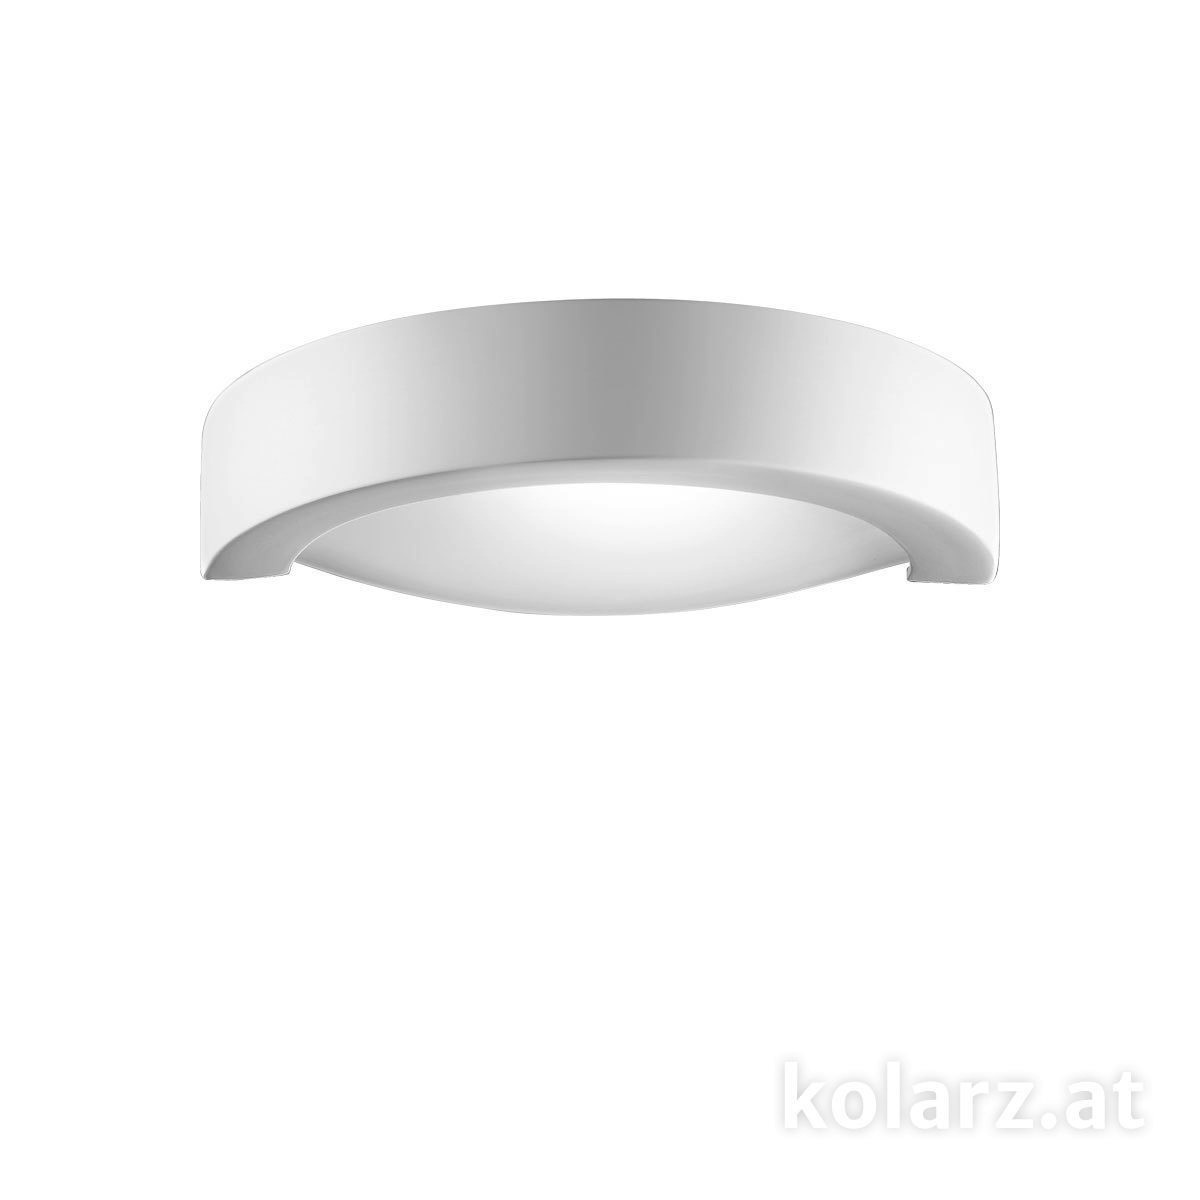 KOLARZ Leuchten Moderne Wandleuchten & Wandlampen fürs Esszimmer von KOLARZ Leuchten Wandleuchte CASABLANCA 219.63.1